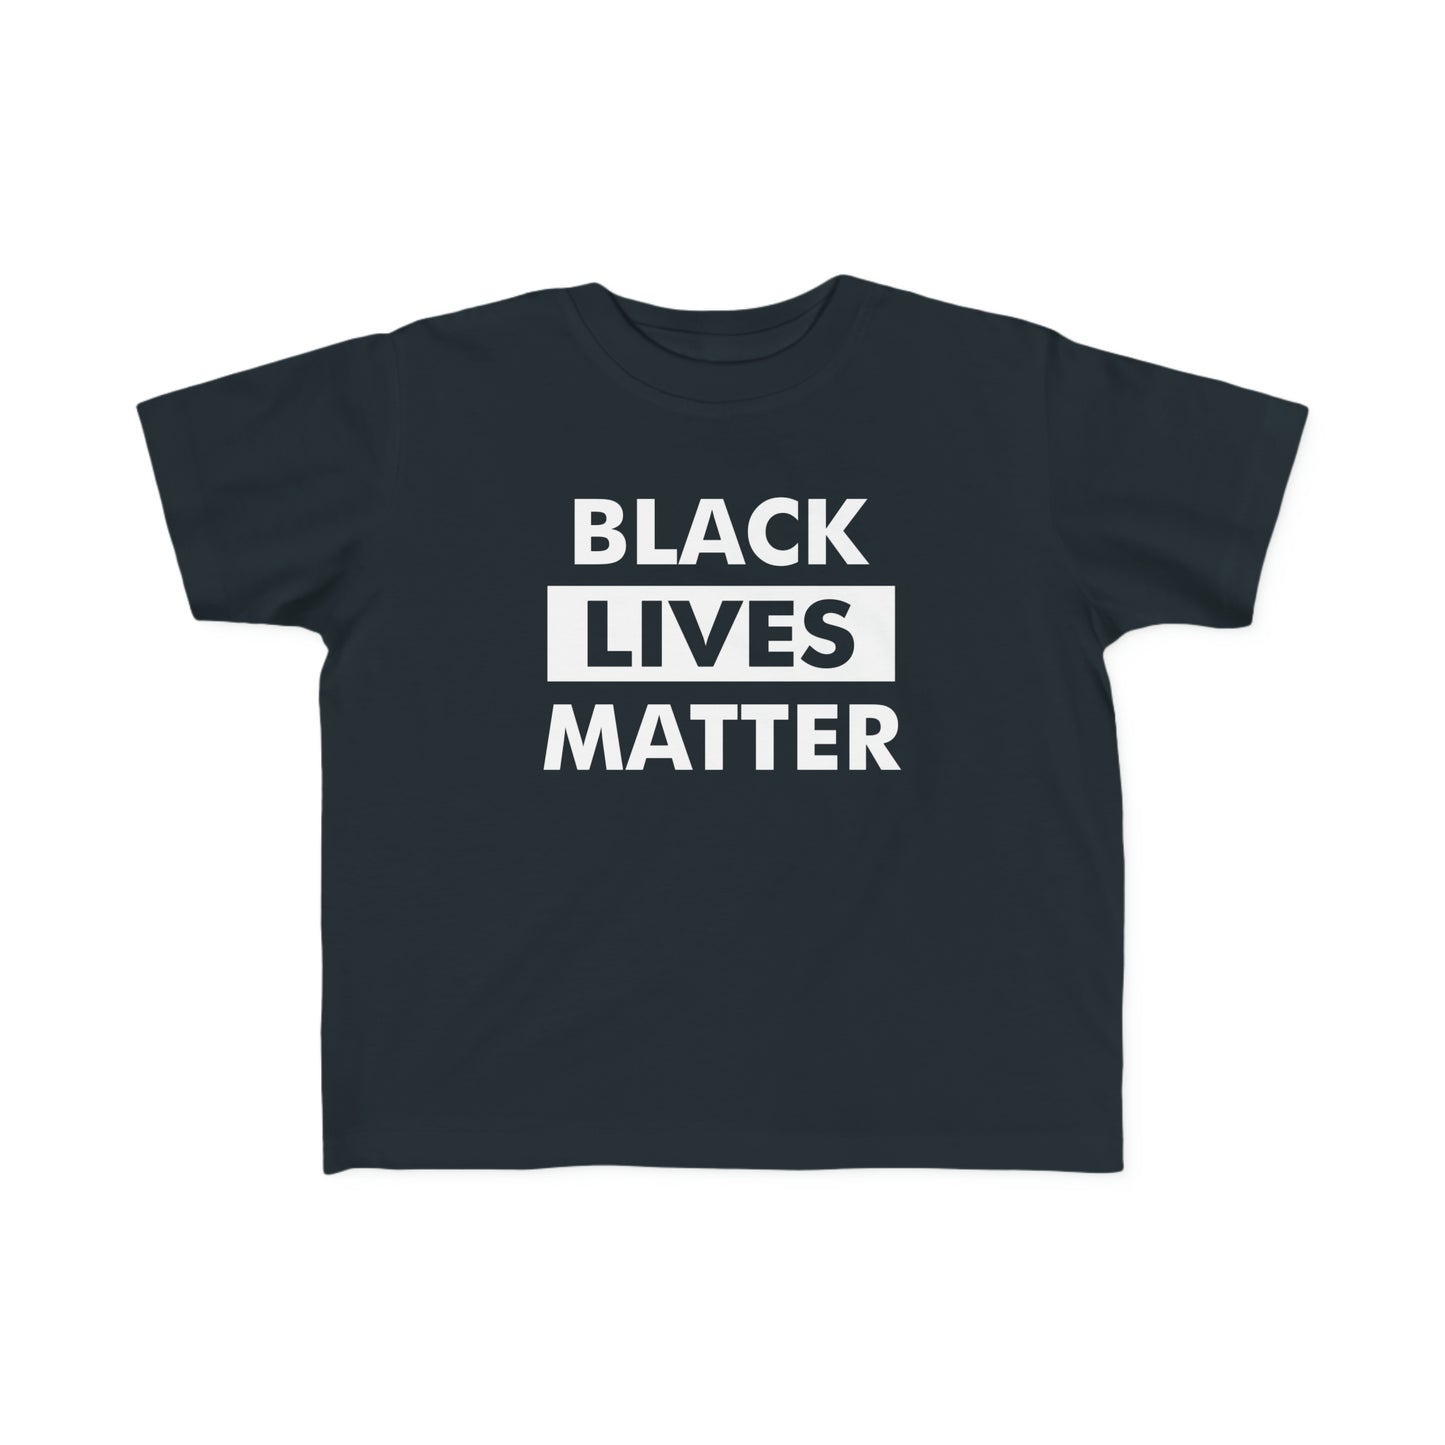 “Black Lives Matter” Toddler's Tee